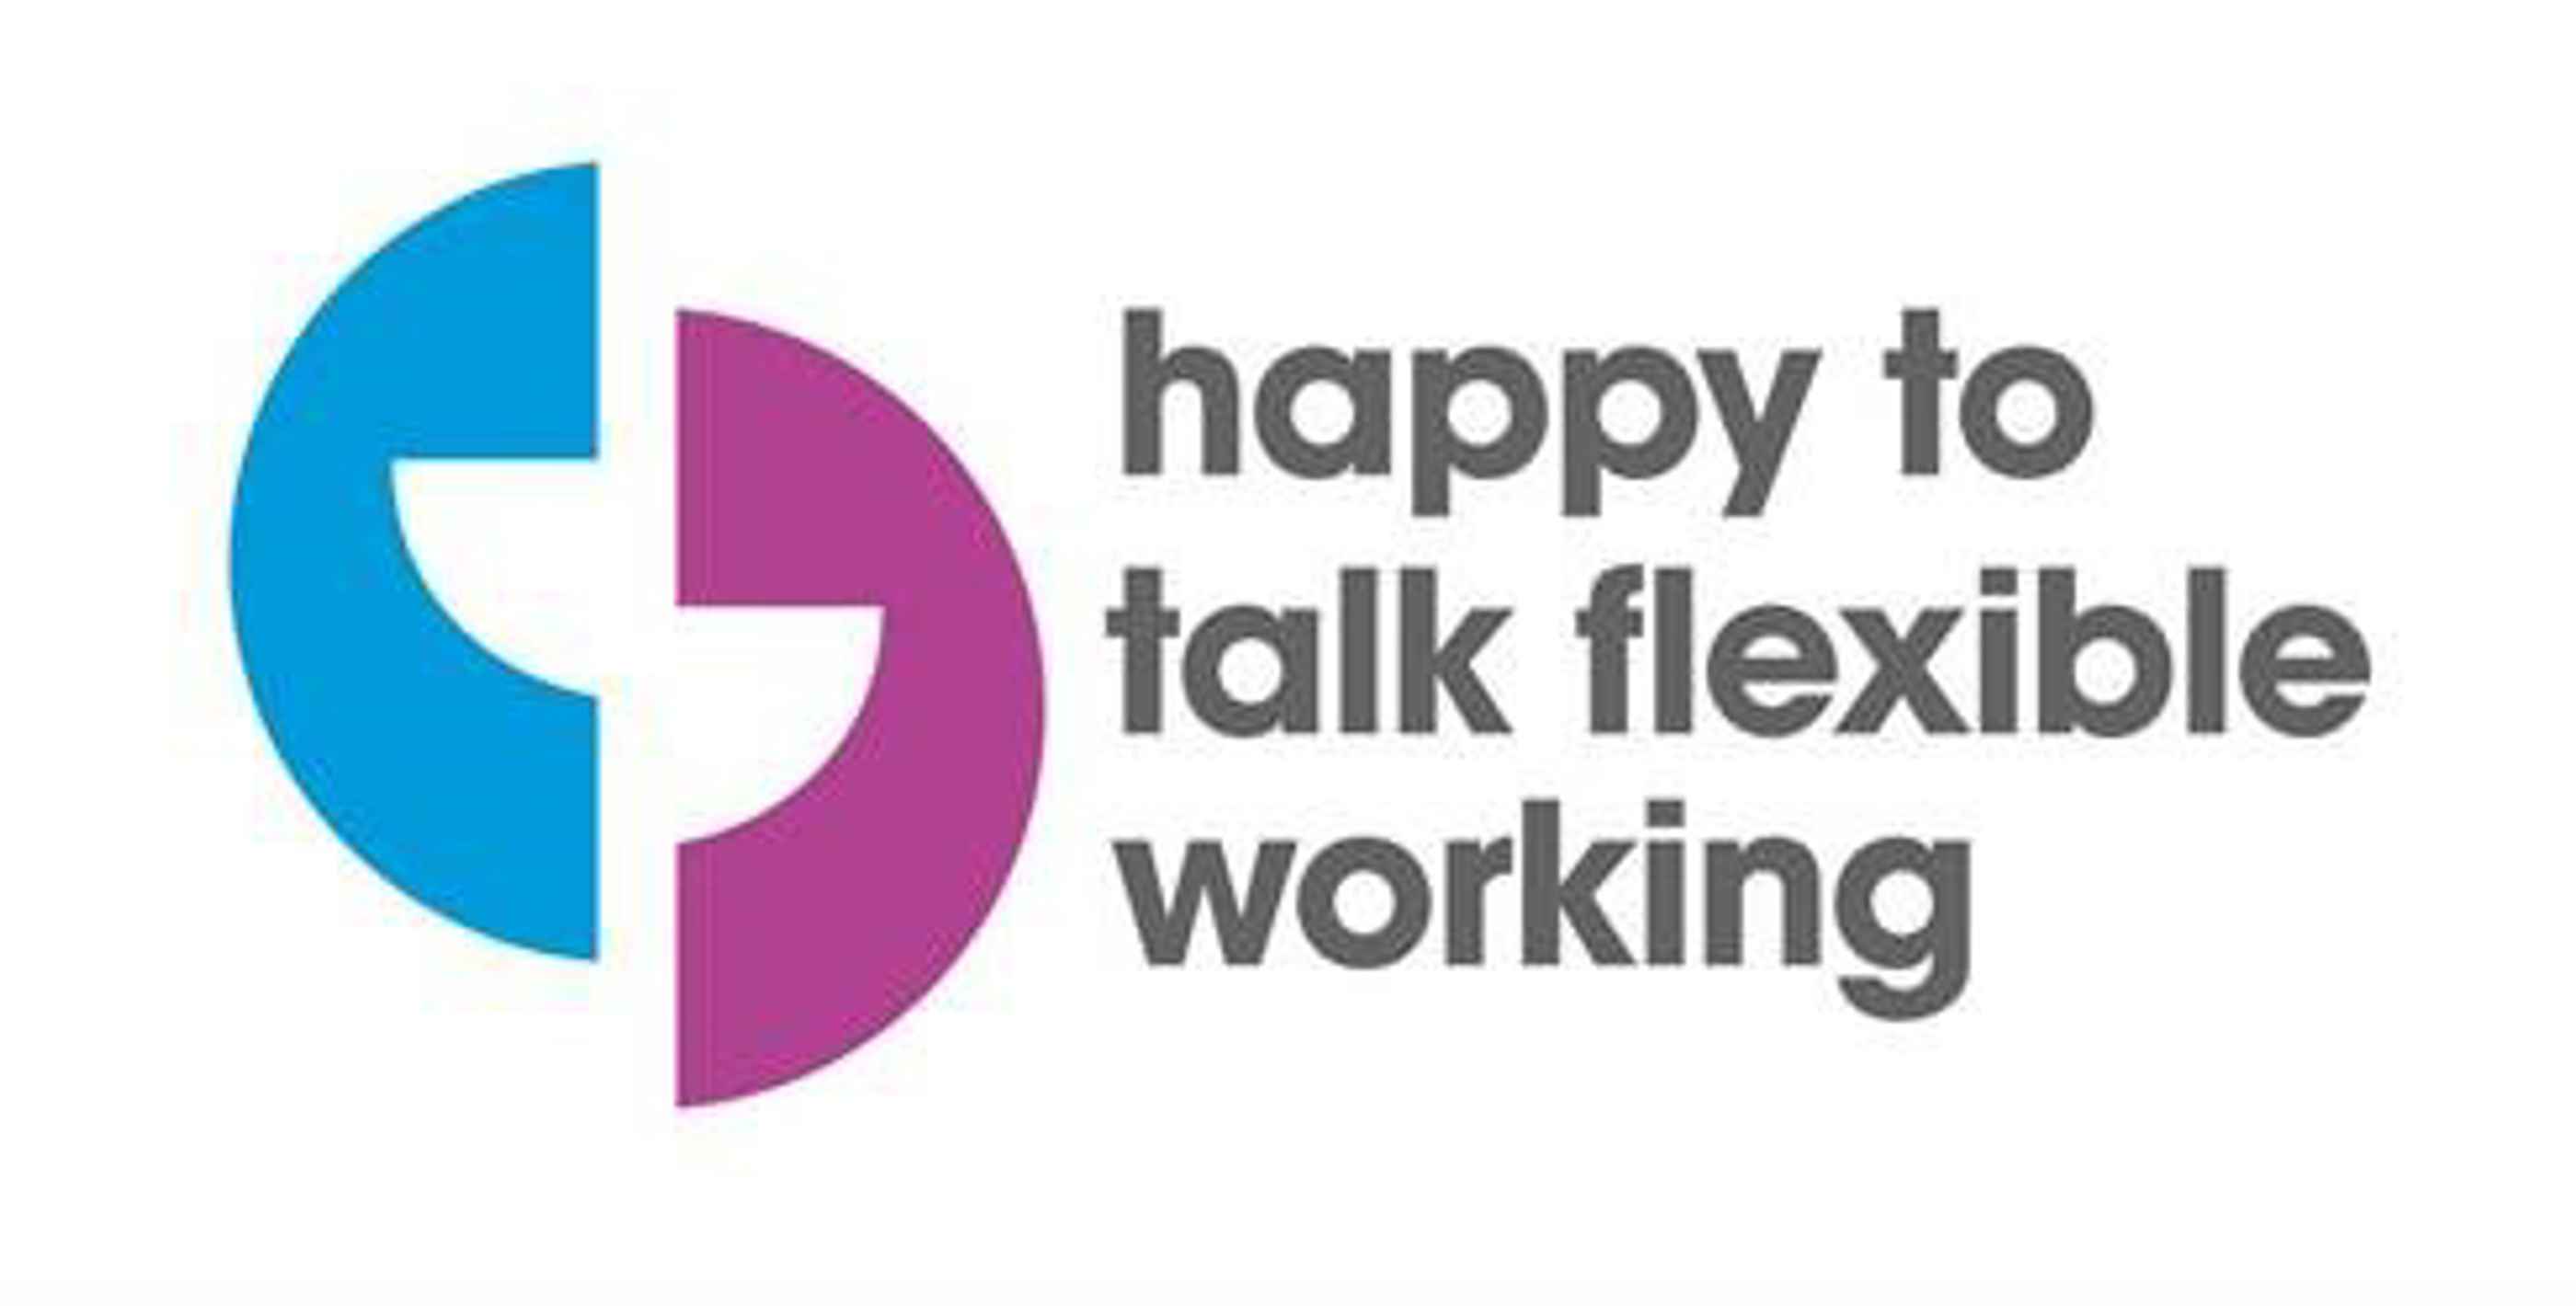 flexible working logo.jpg